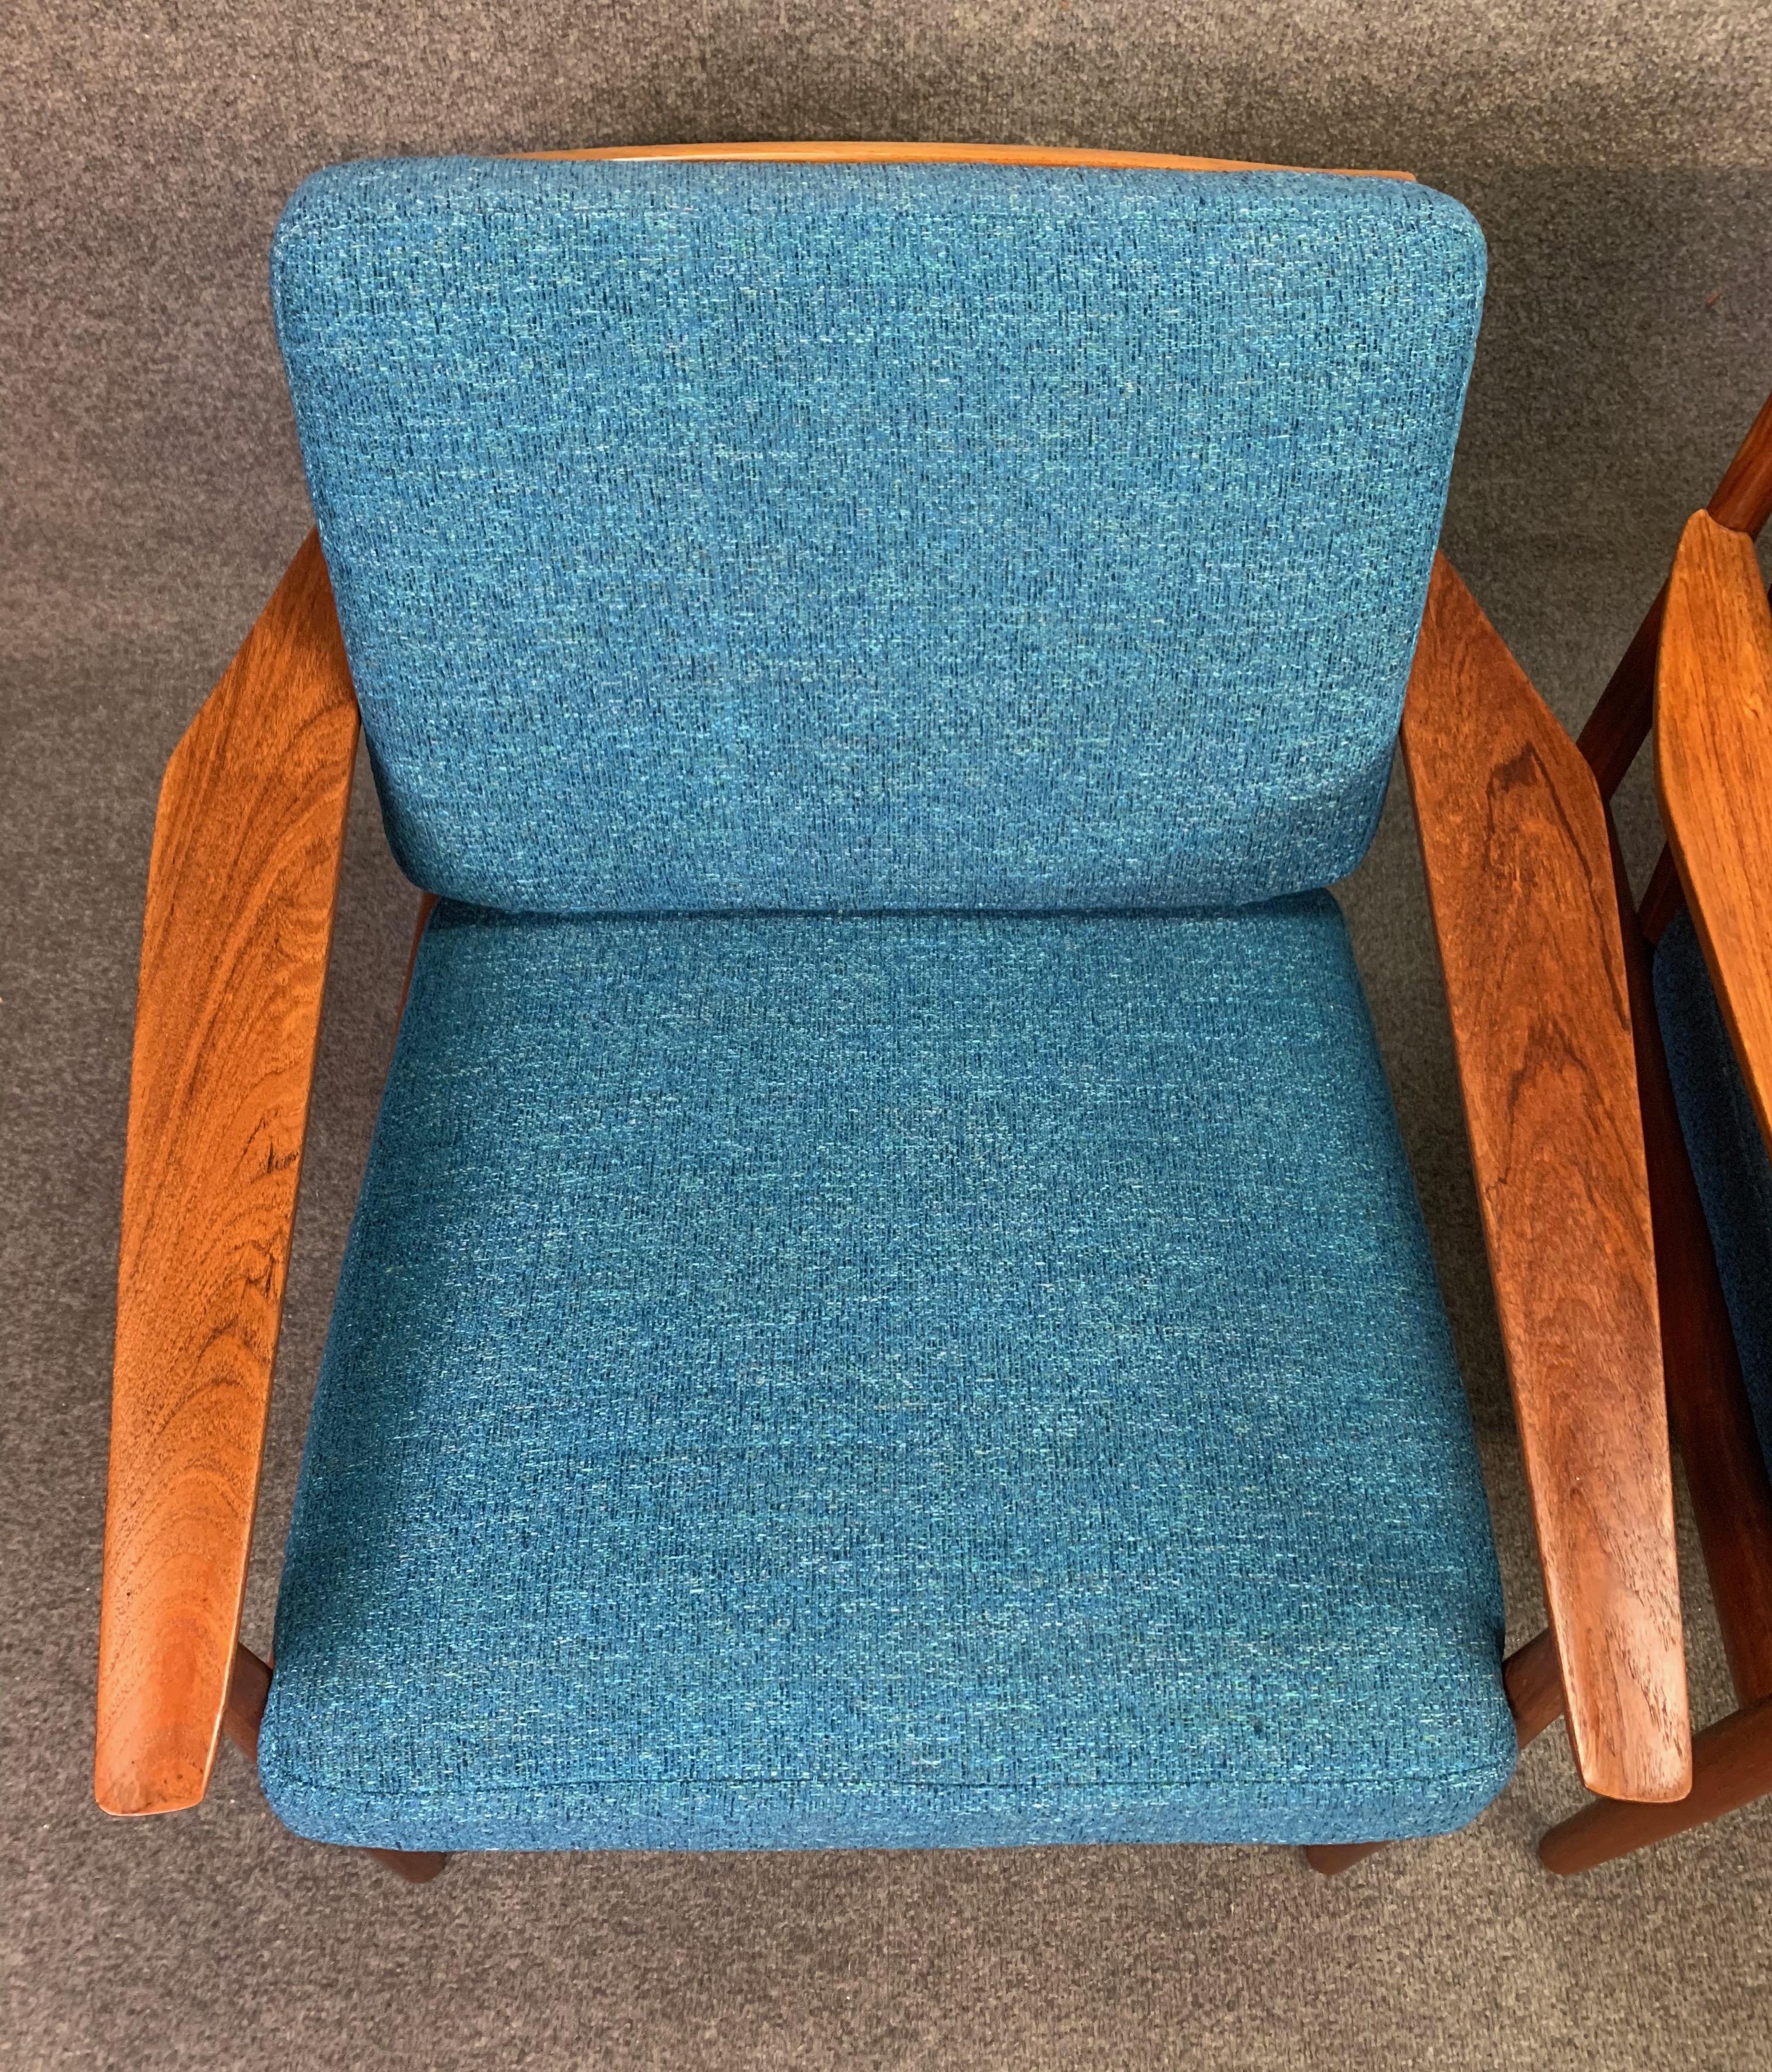 Woodwork Pair of Vintage Danish Midcentury Teak Easy Chairs by Arne Vodder for Glostrup